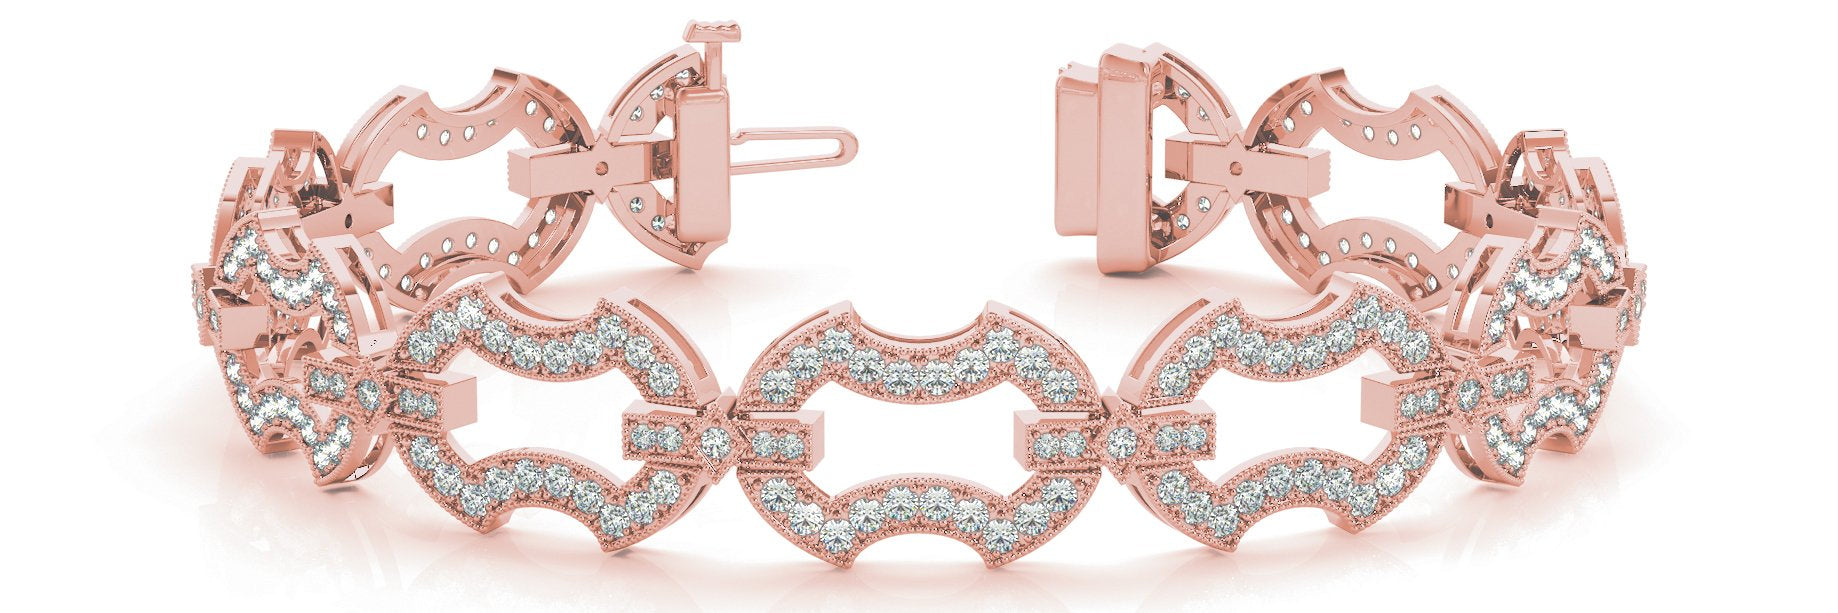 Fancy Diamond Bracelet Ladies 2.79ct tw - 14kt Gold